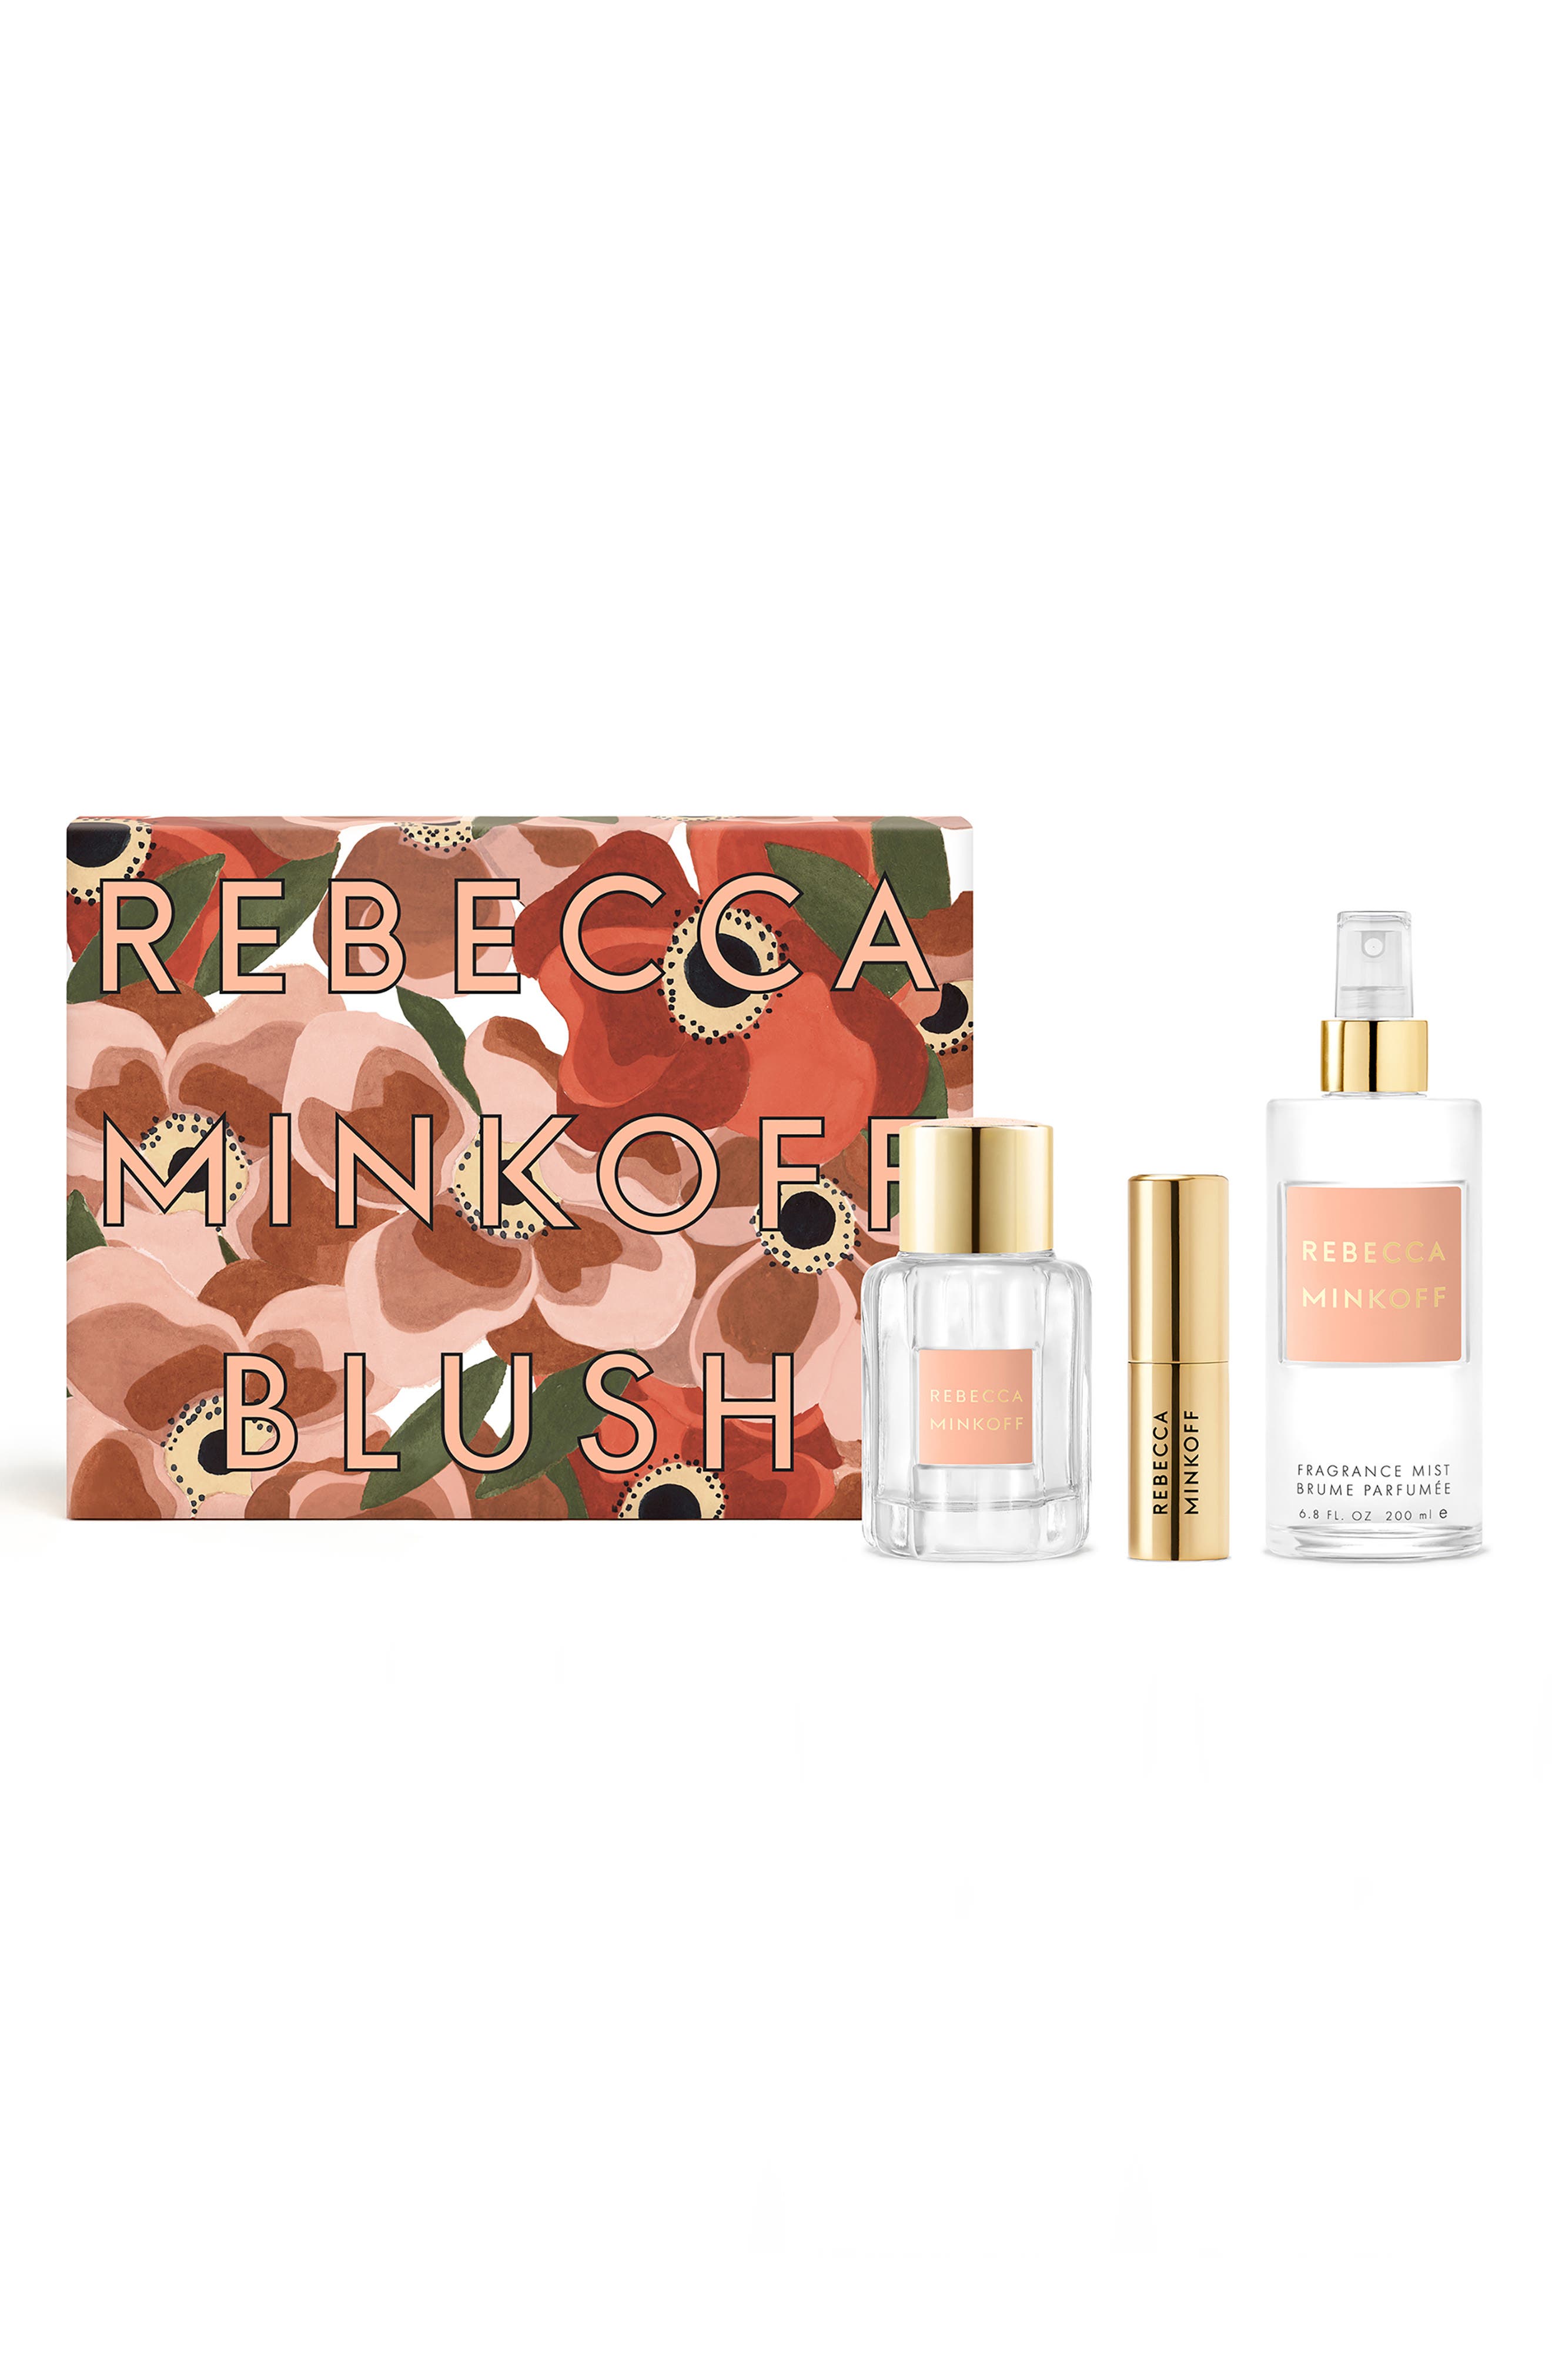 Rebecca Minkoff Blush Eau de Parfum Set USD $140 Value at Nordstrom